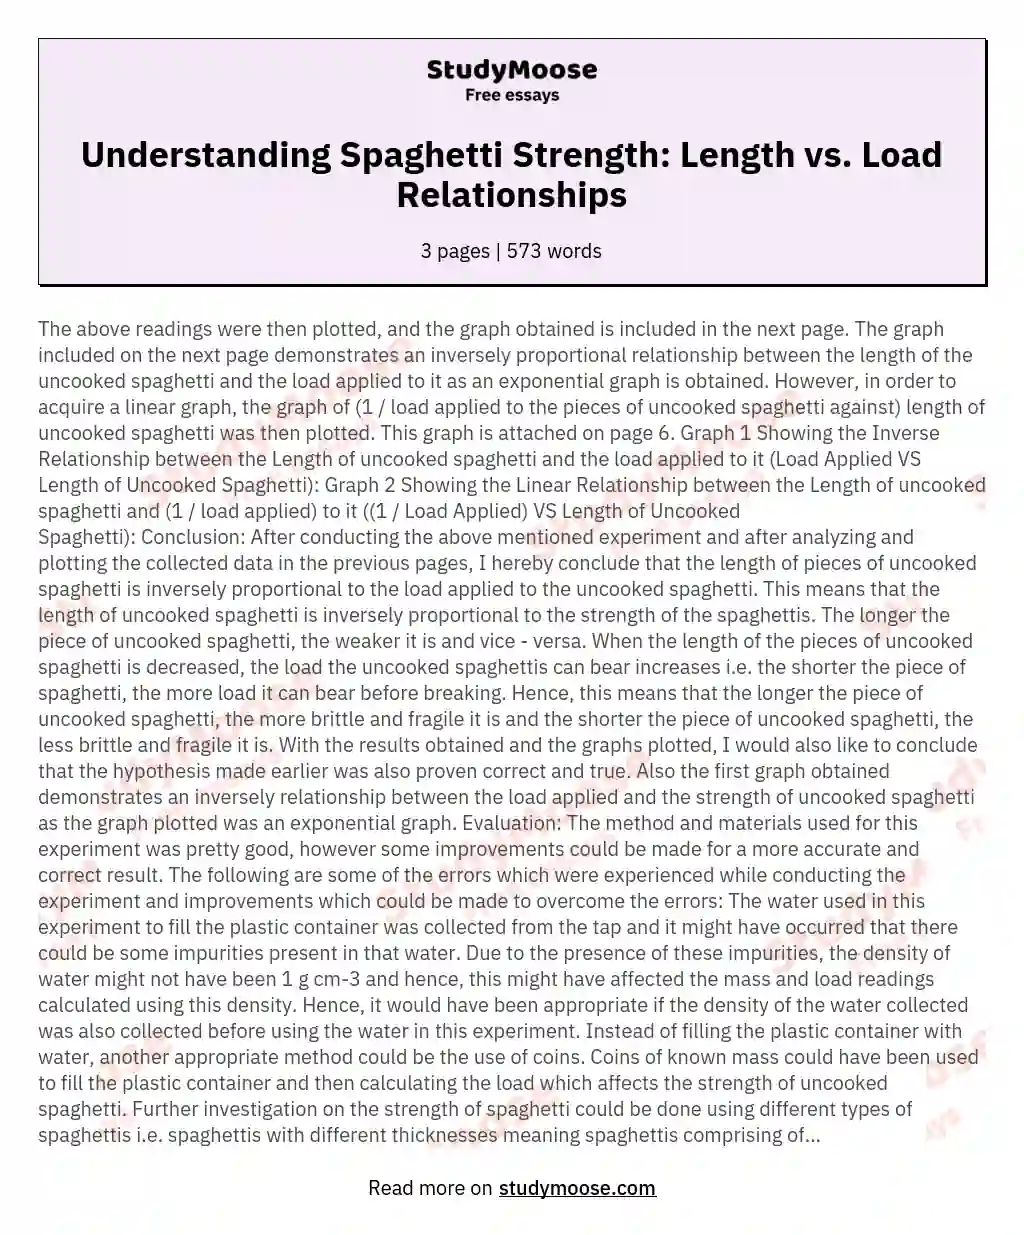 Understanding Spaghetti Strength: Length vs. Load Relationships essay